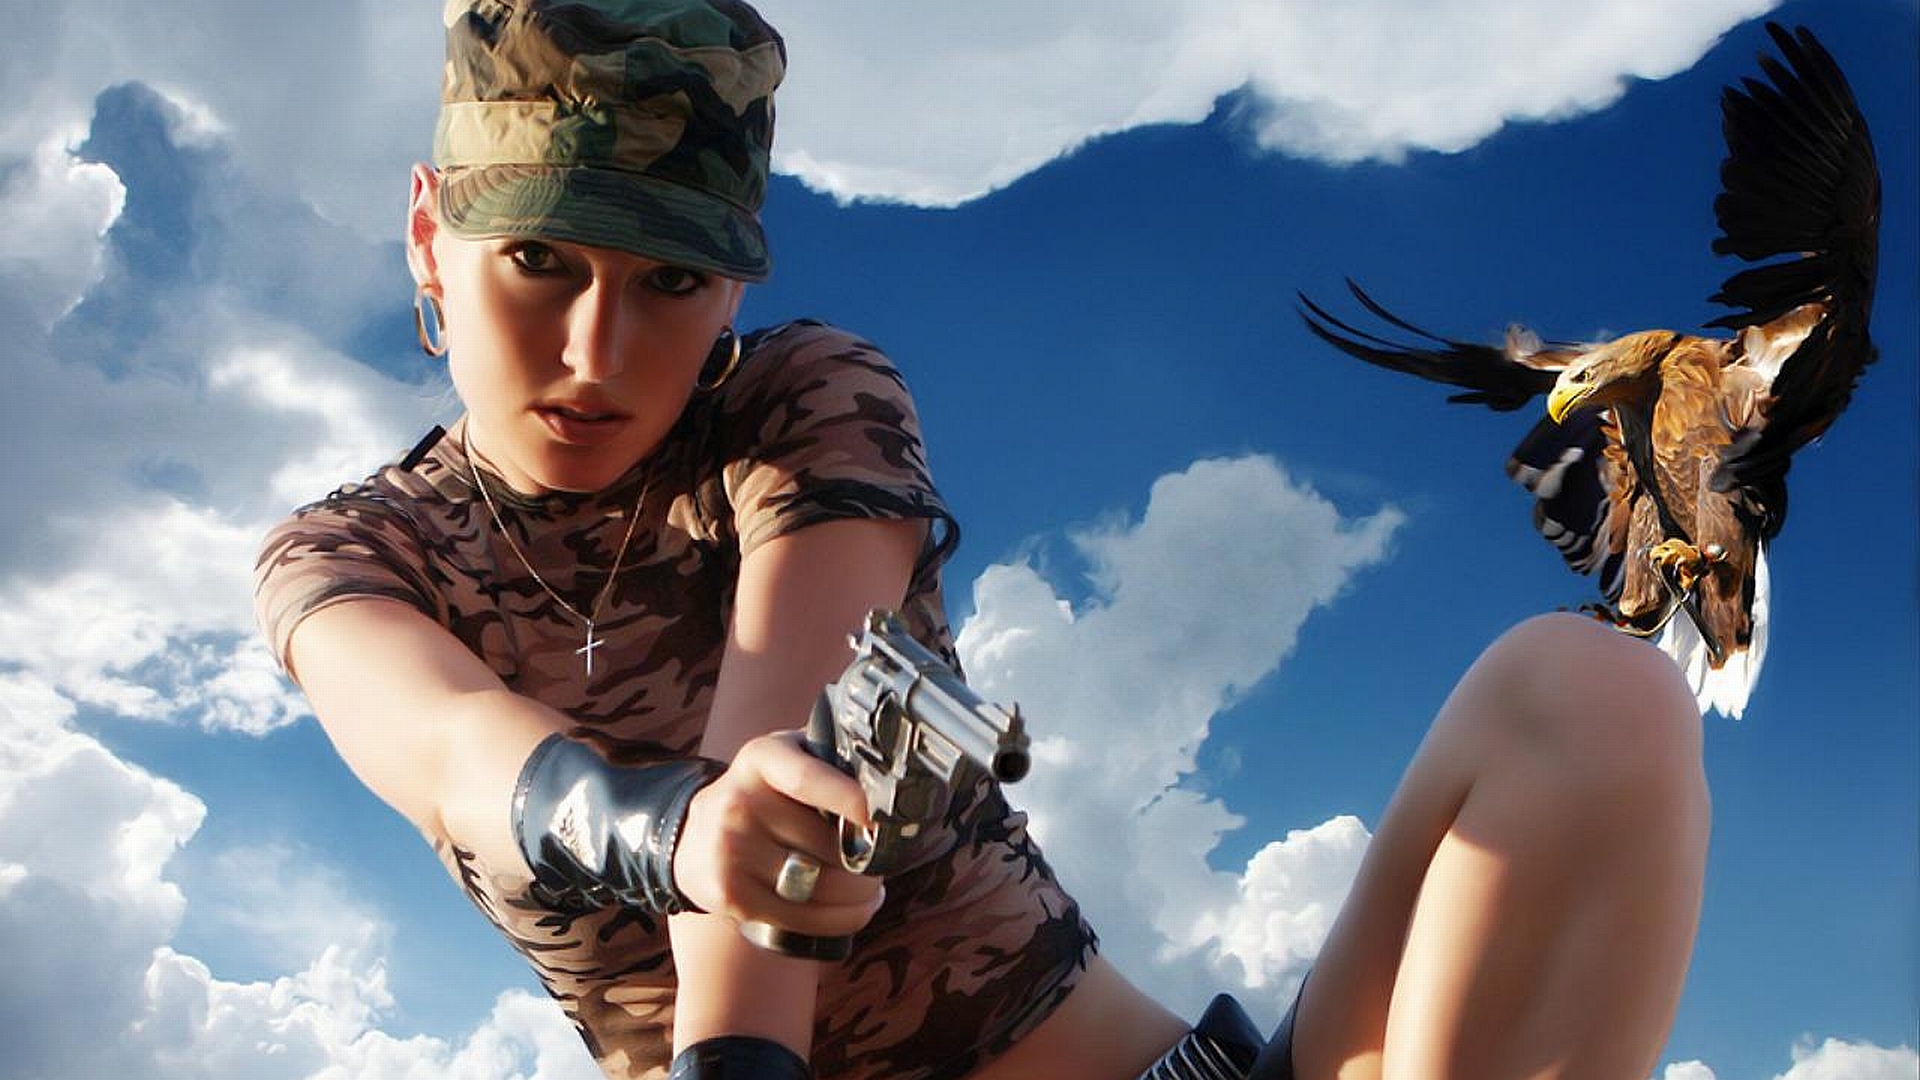 Women Girls & Guns HD Wallpaper | Background Image